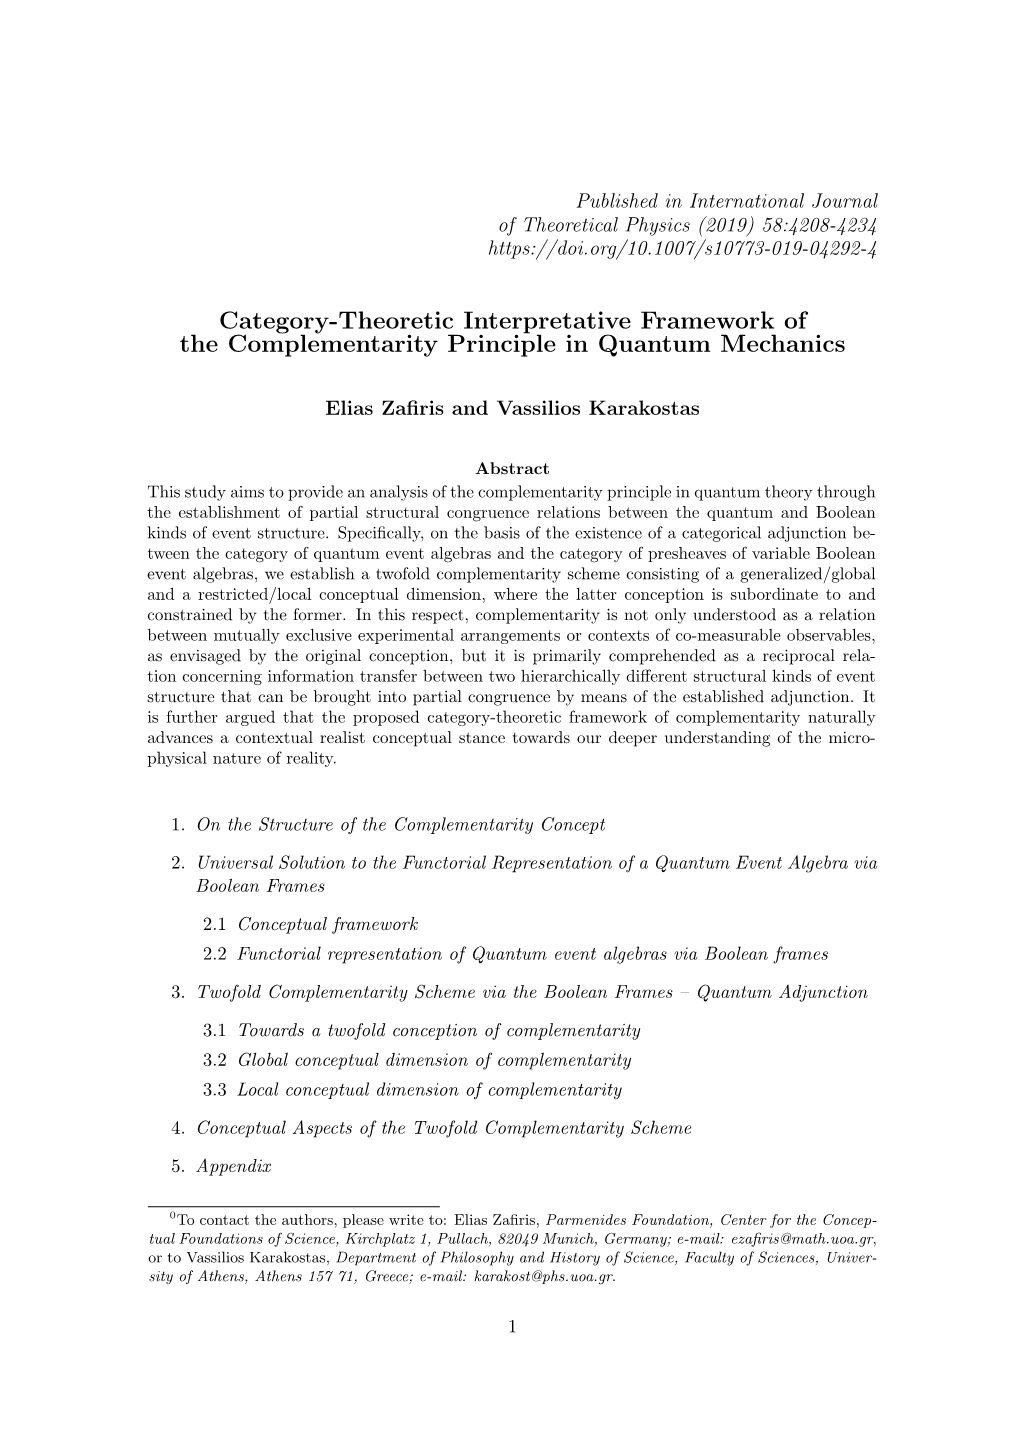 Category-Theoretic Interpretative Framework of the Complementarity Principle in Quantum Mechanics